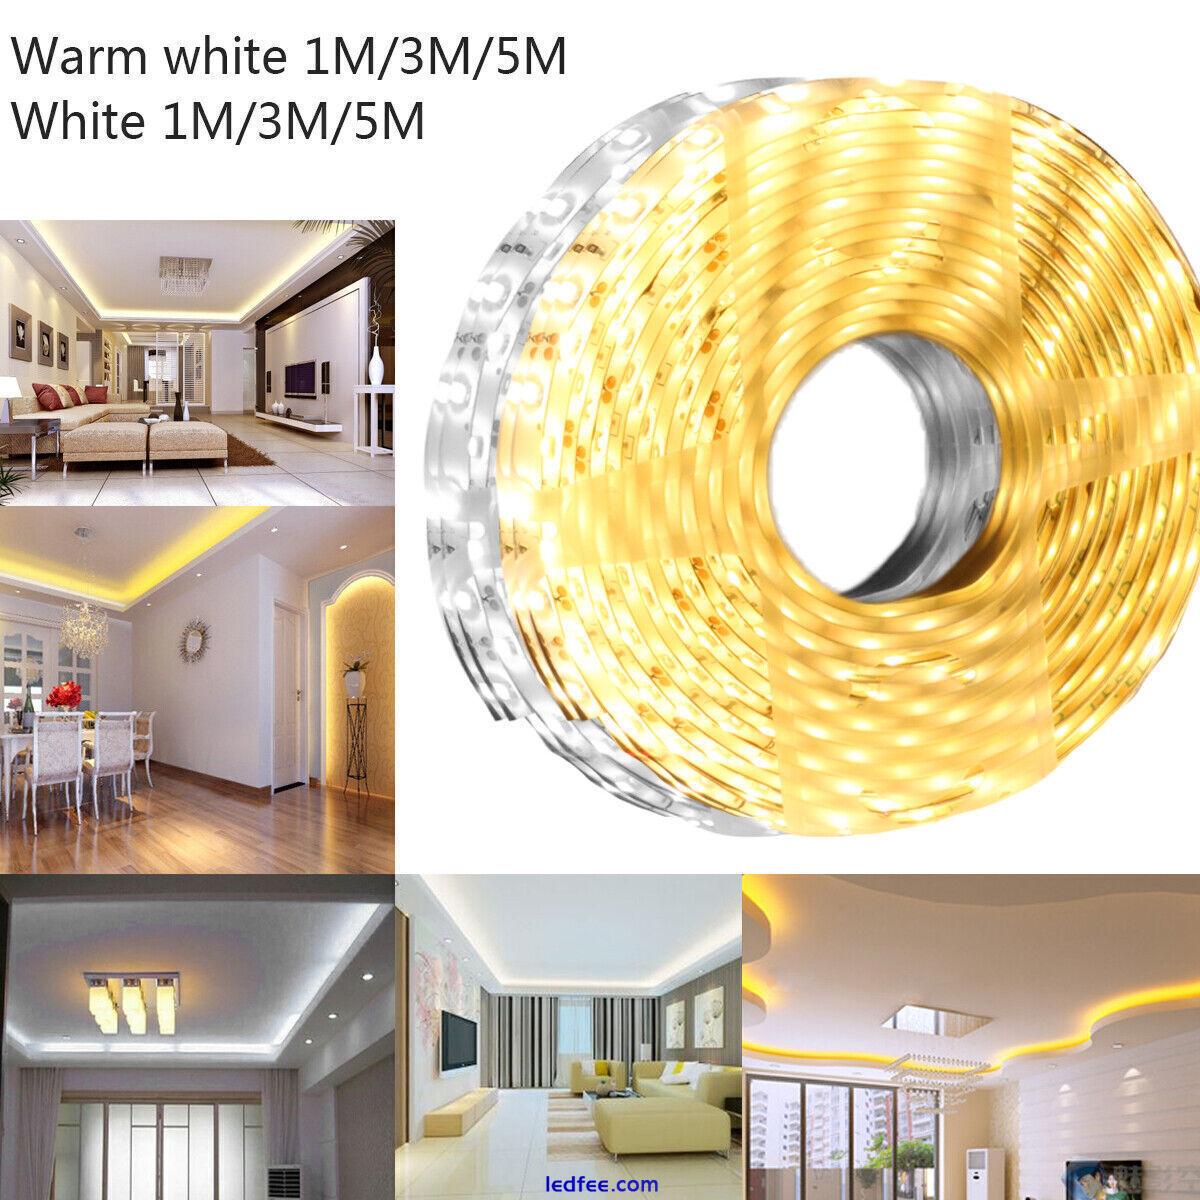 LED Strip Light Home Lighting 5630 SMD White/Warm White Waterproof 1M 3M 5M 12V 4 